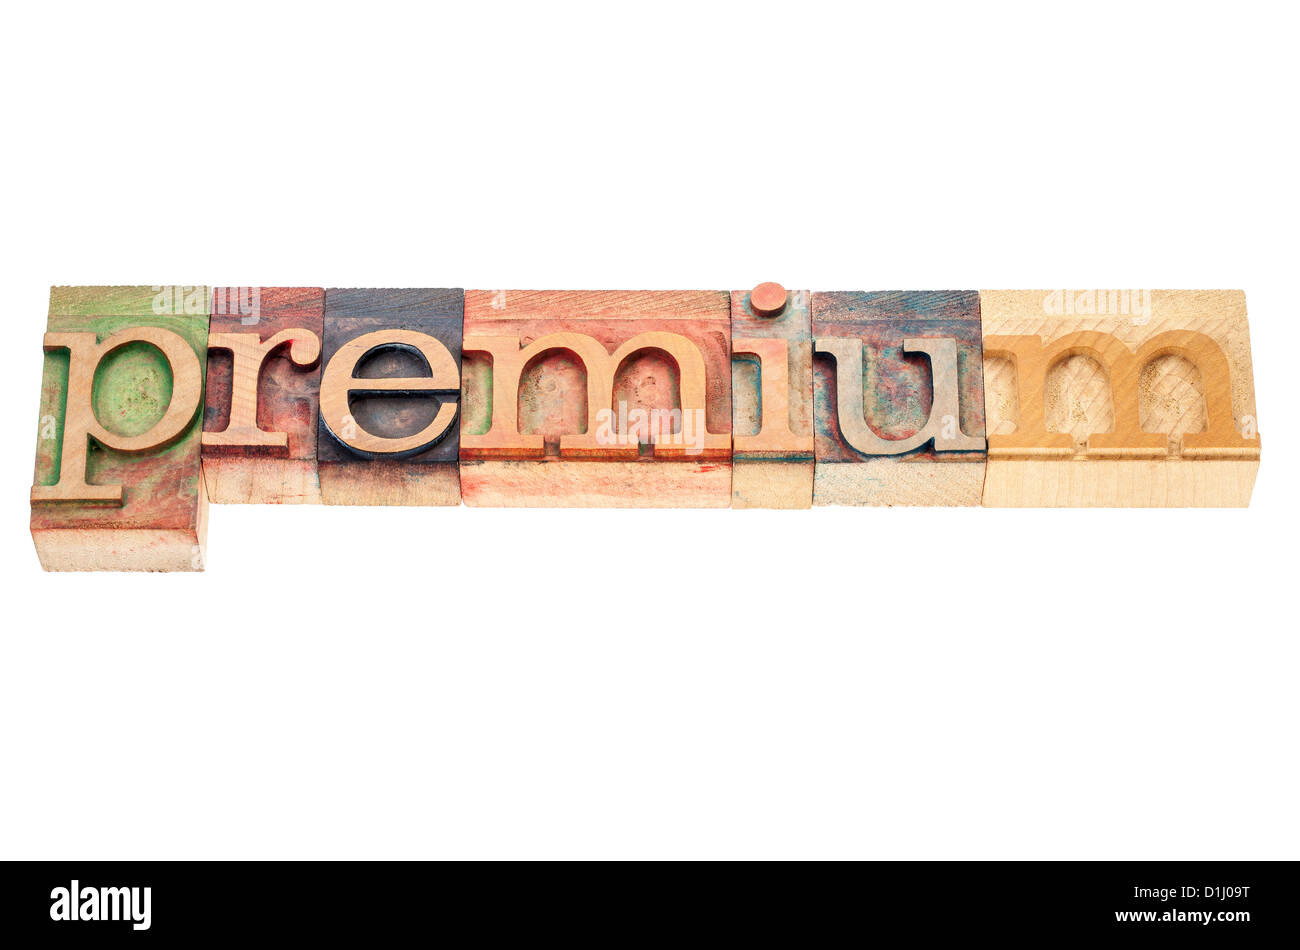 premium - isolated word in vintage letterpress wood type printing blocks Stock Photo